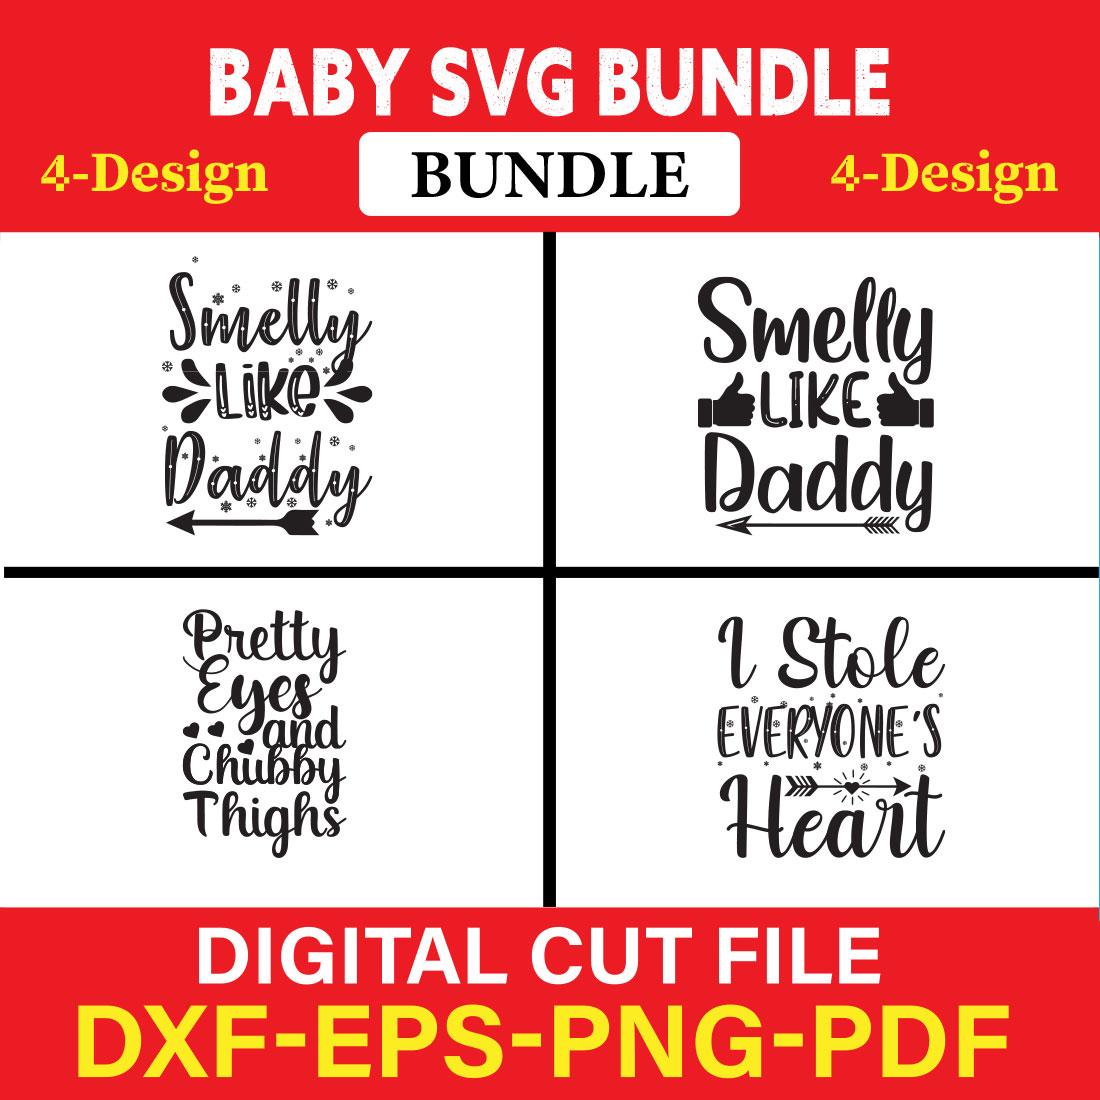 Baby T-shirt Design Bundle Vol-10 cover image.